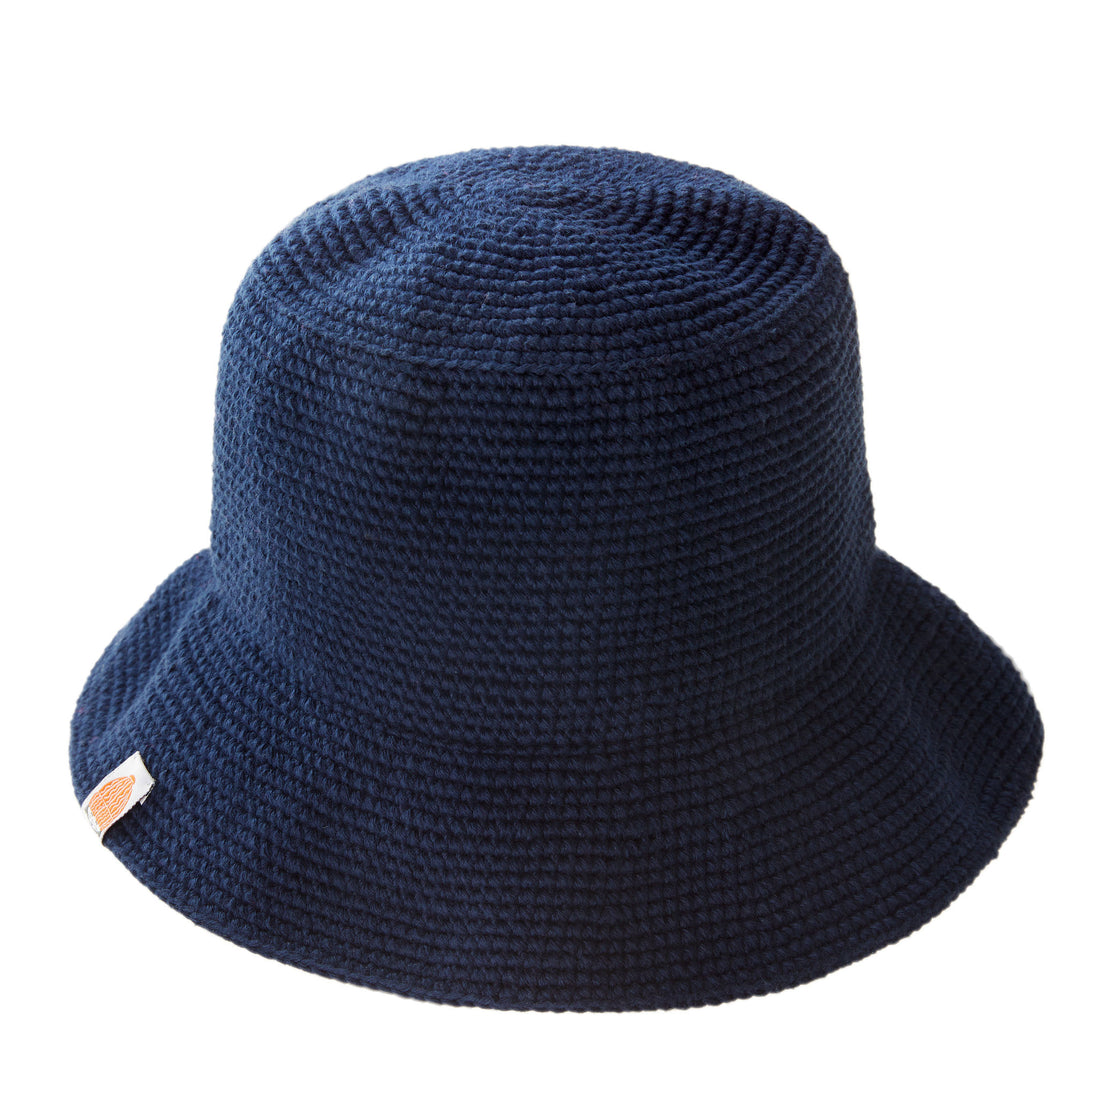 The Breton Bucket Hat